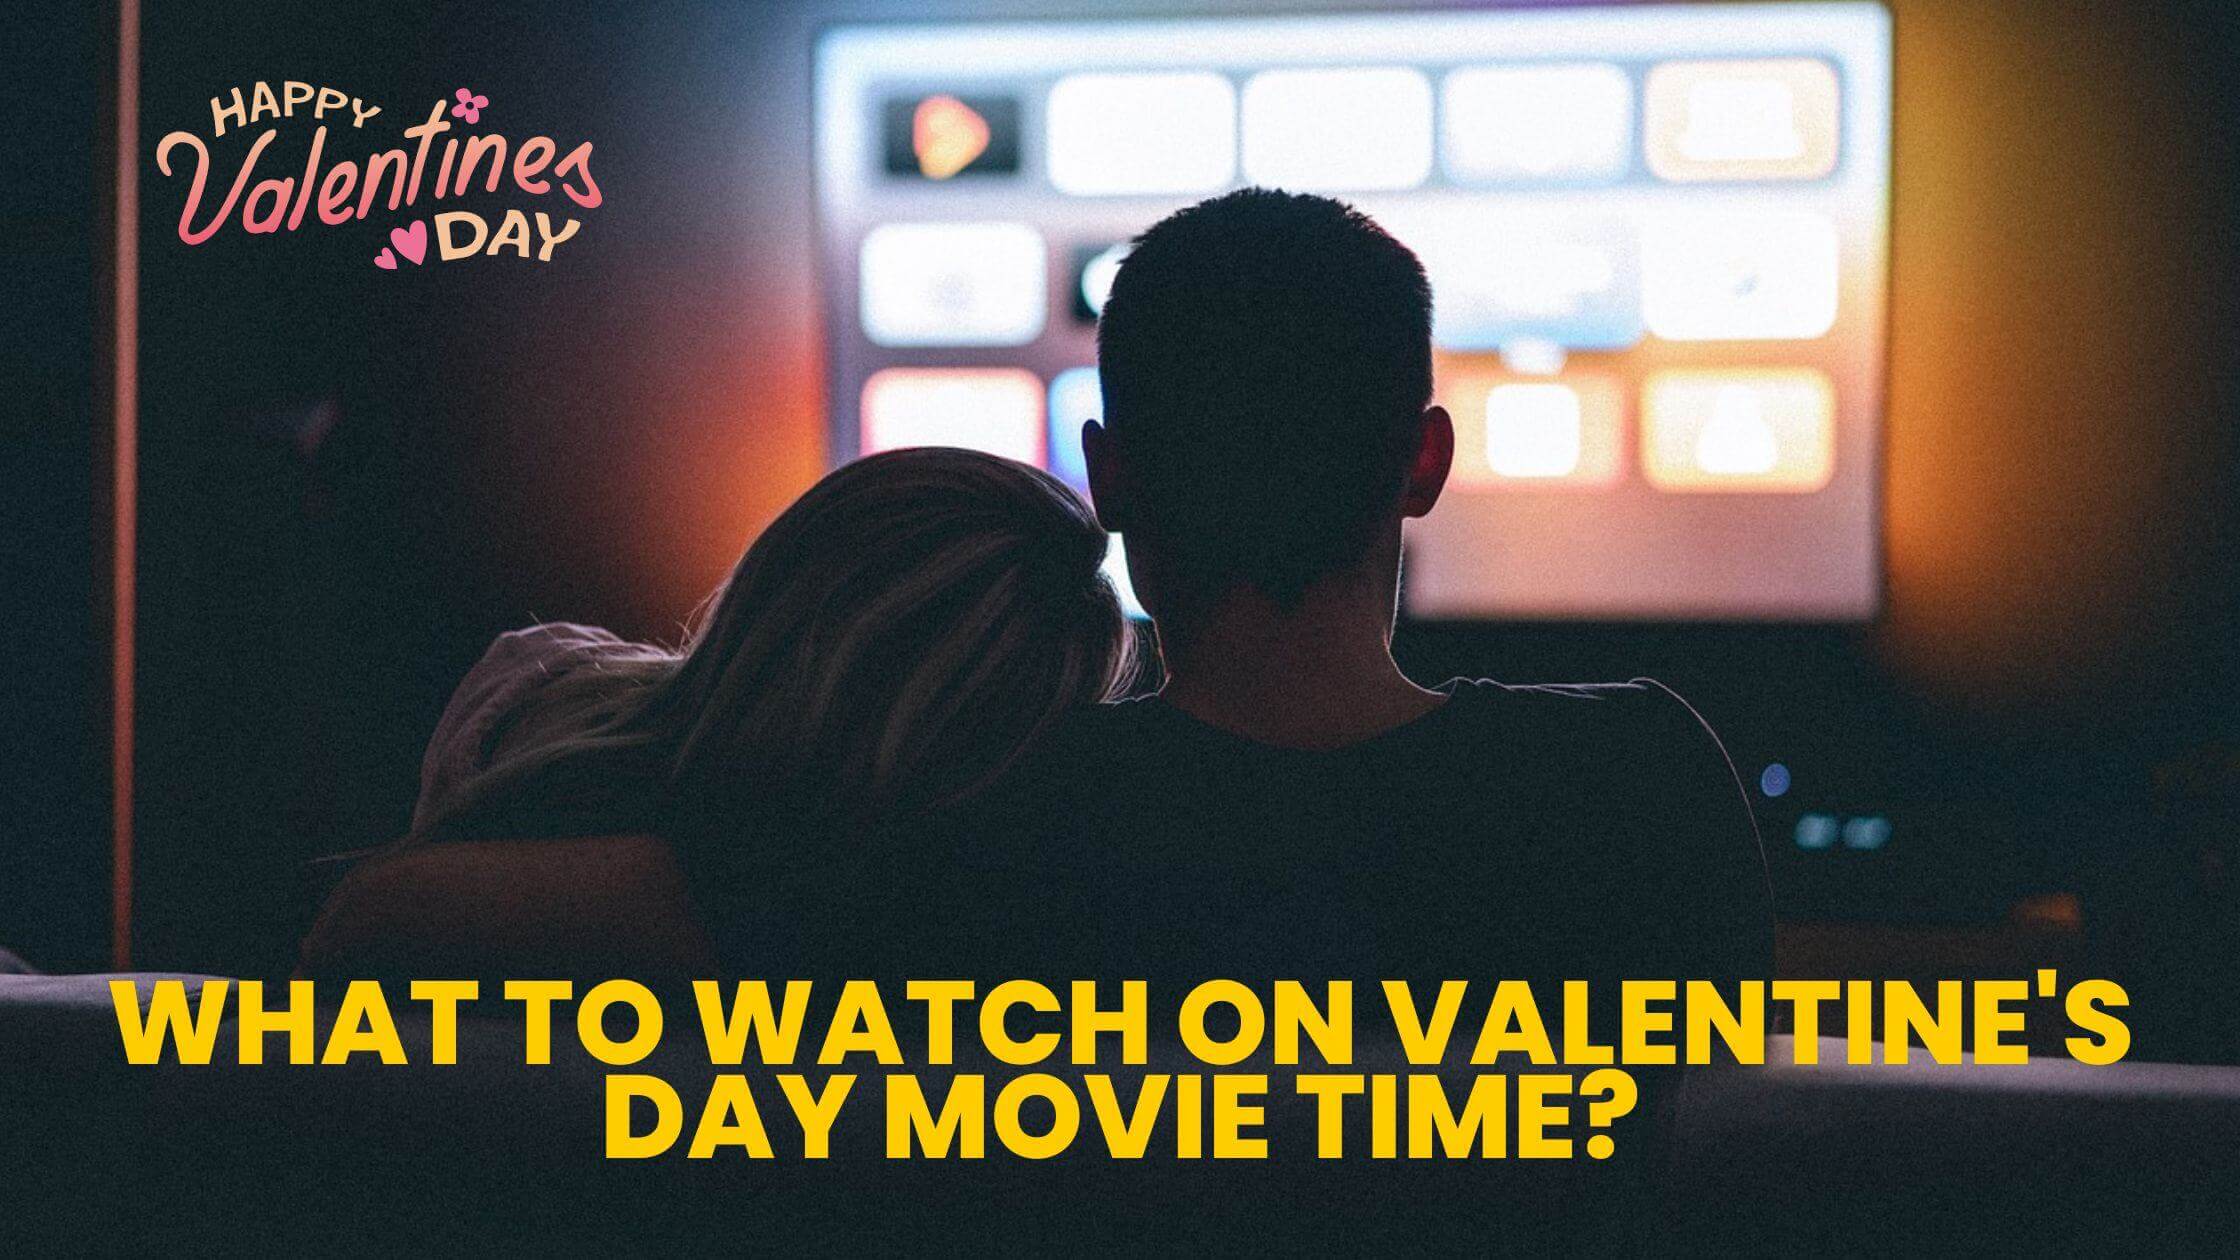 on Valentine's Day Movie Time